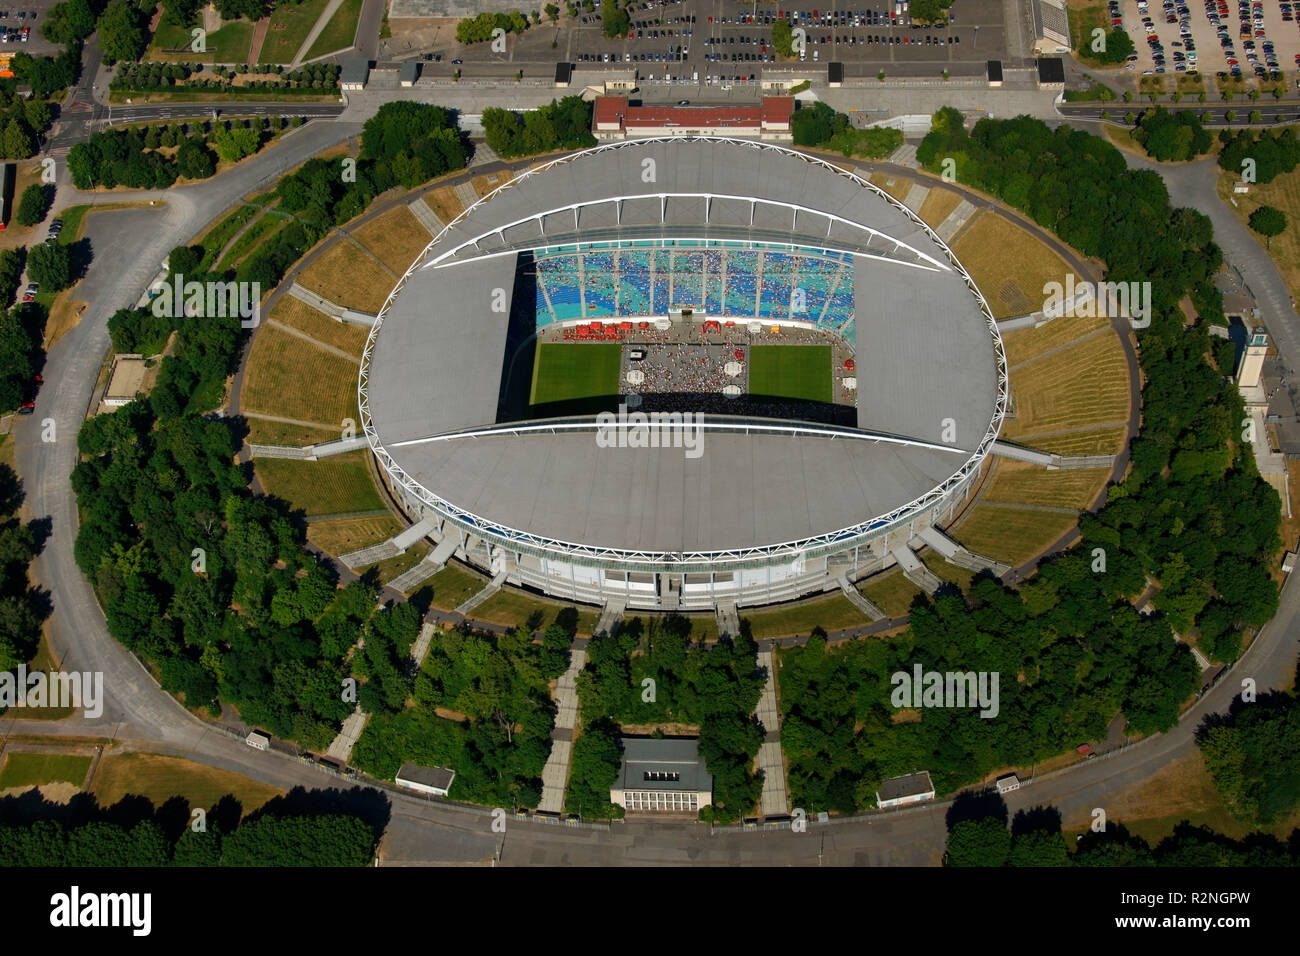 Aerial View, Zentralstadion, Elsterbecken, Public Viewing in the Stadium, Aerial View, Kleinmesseplatz, Leipzig, Saxony, Germany, Europe, Stock Photo